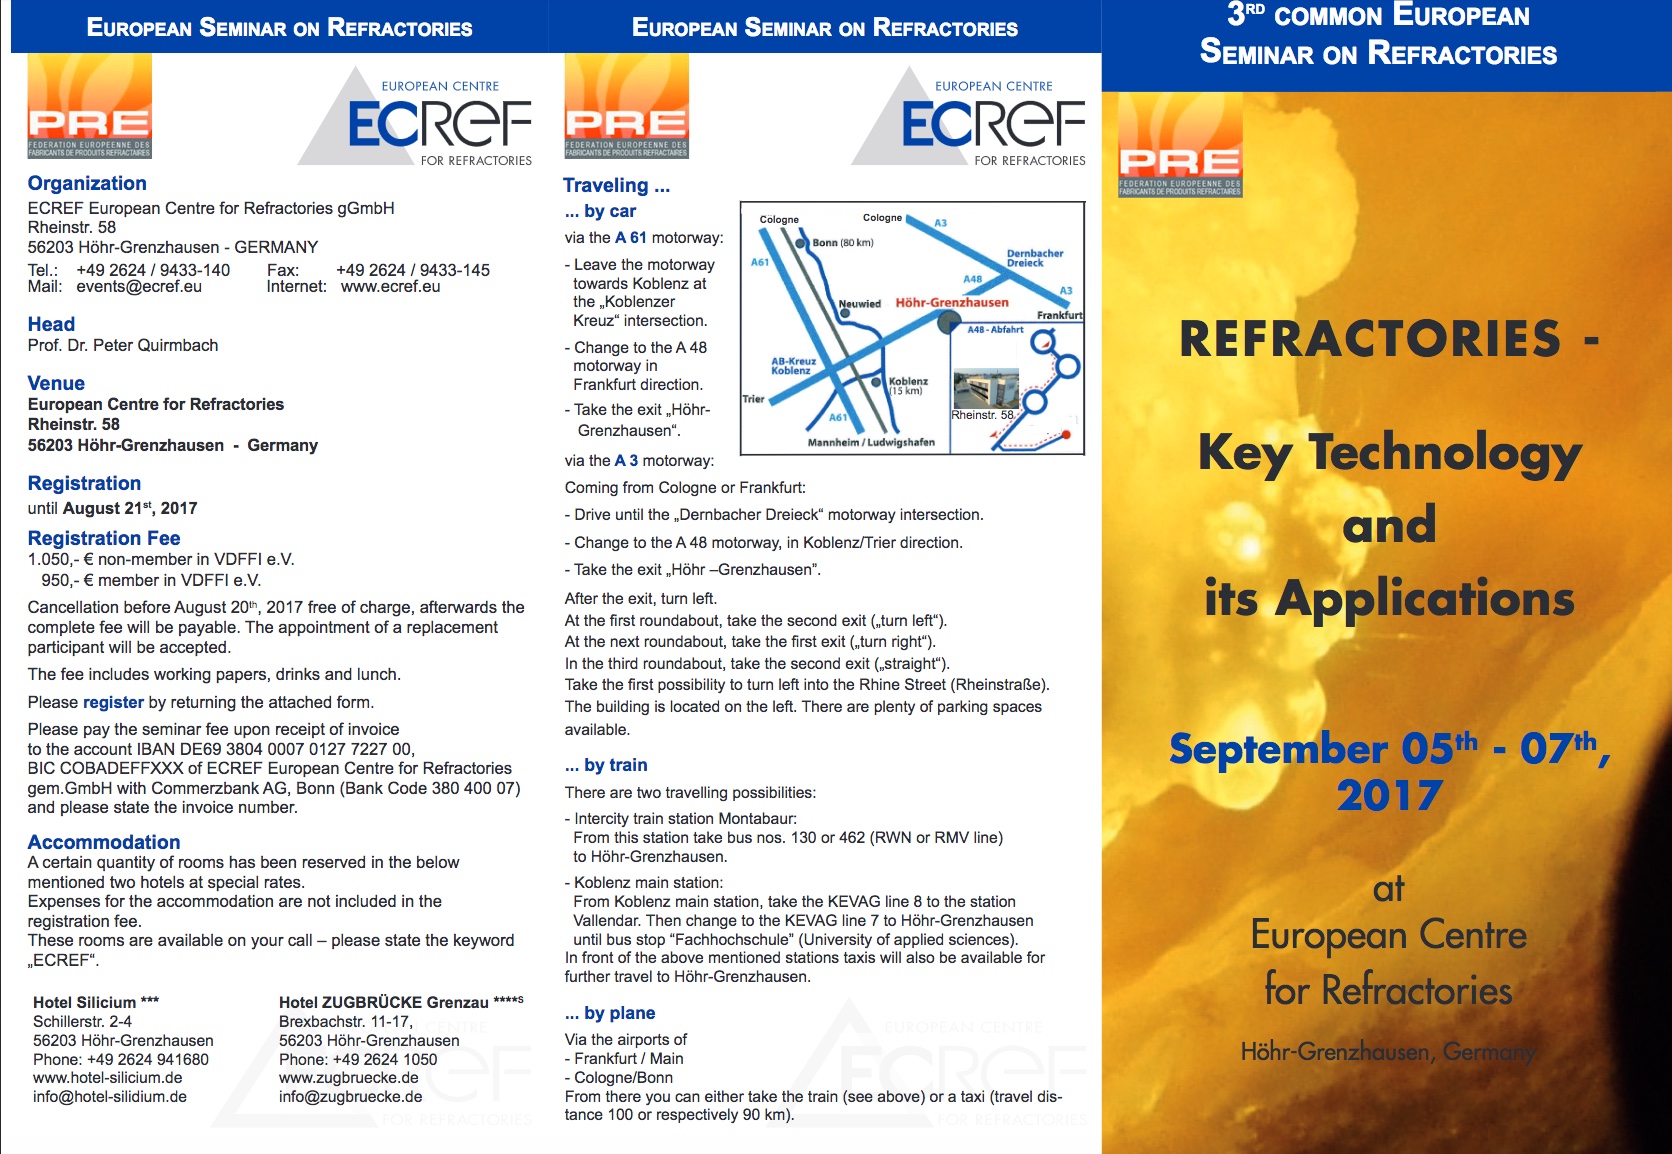 applications of refractories